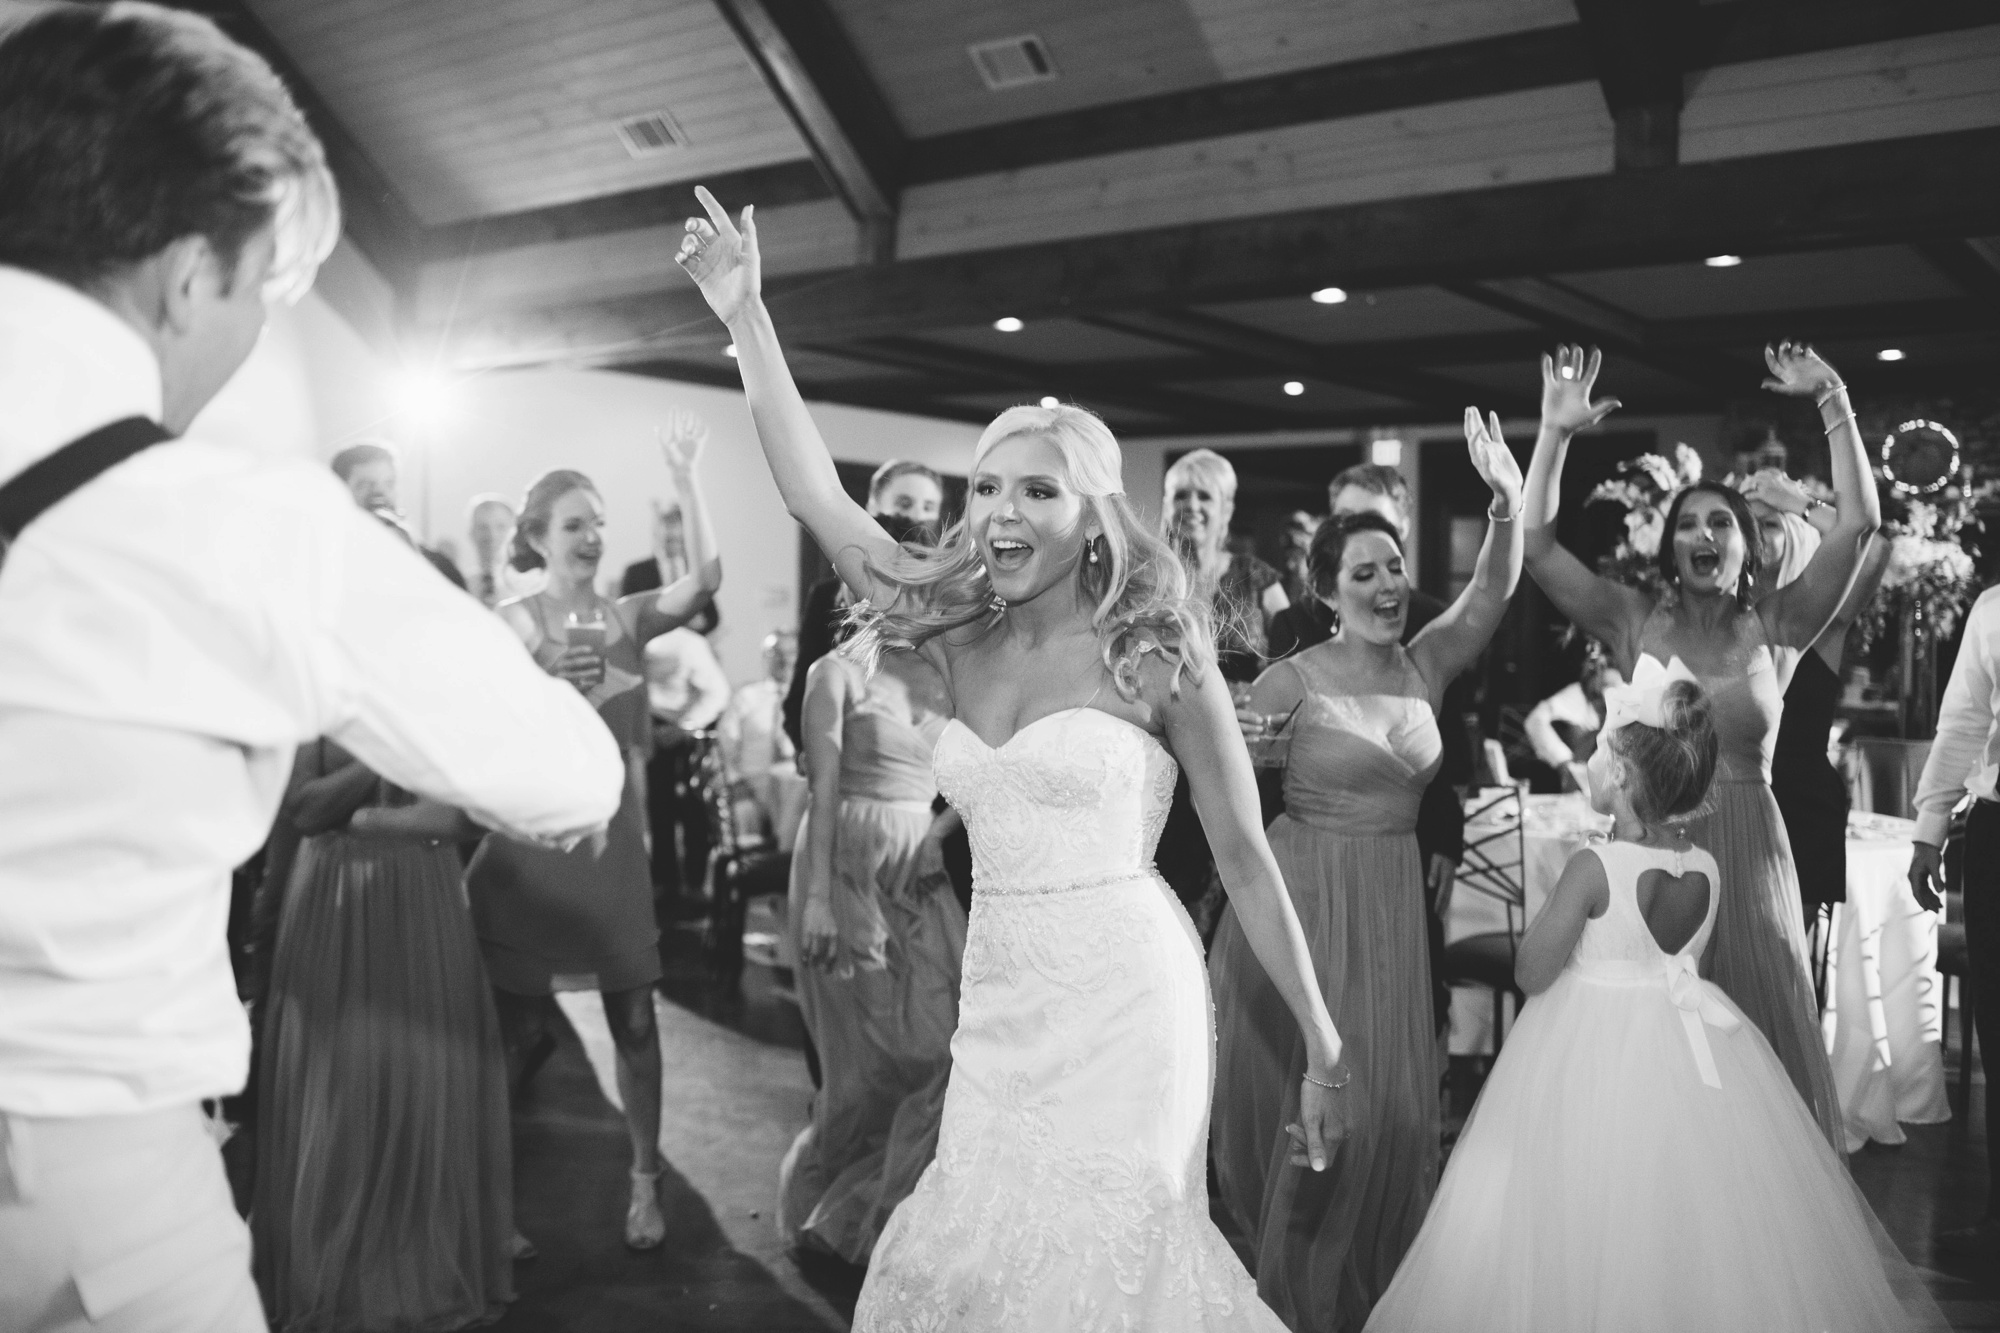 Wedding reception dancing is always a blast to document, says luxury wedding photographer Rebecca Cerasani